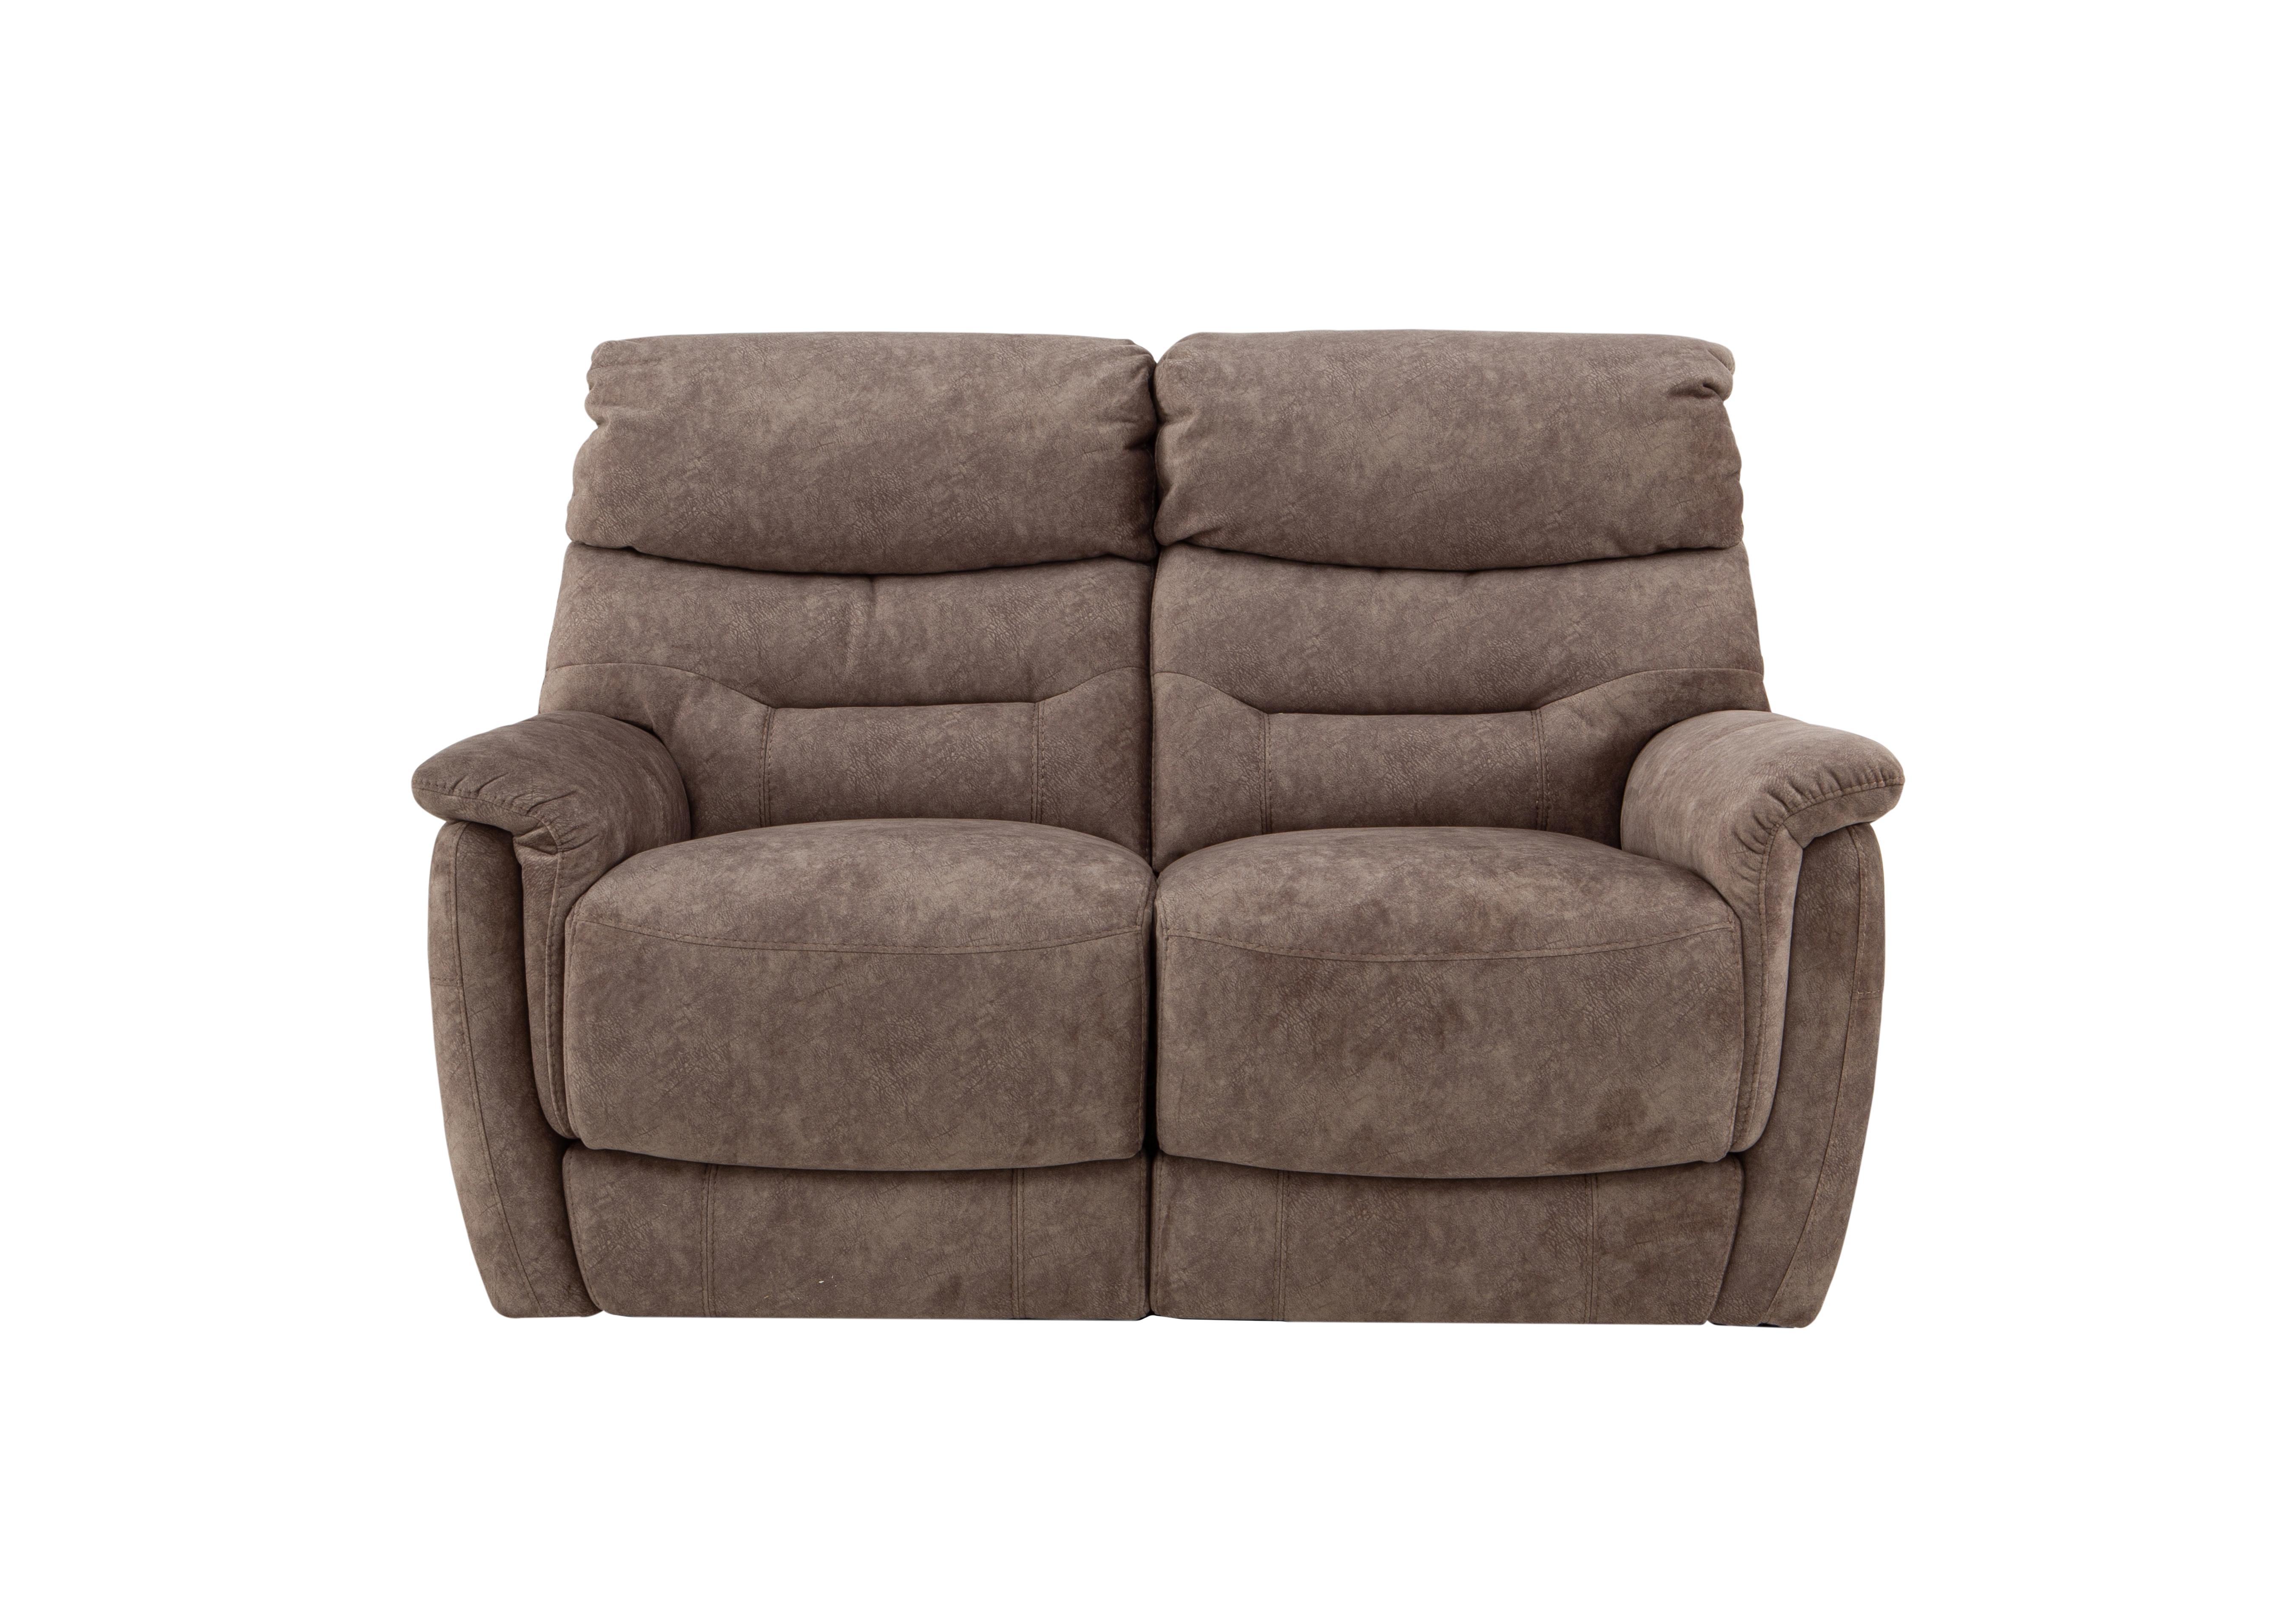 Chicago 2 Seater Fabric Sofa in Bfa-Bnn-R29 Mink on Furniture Village